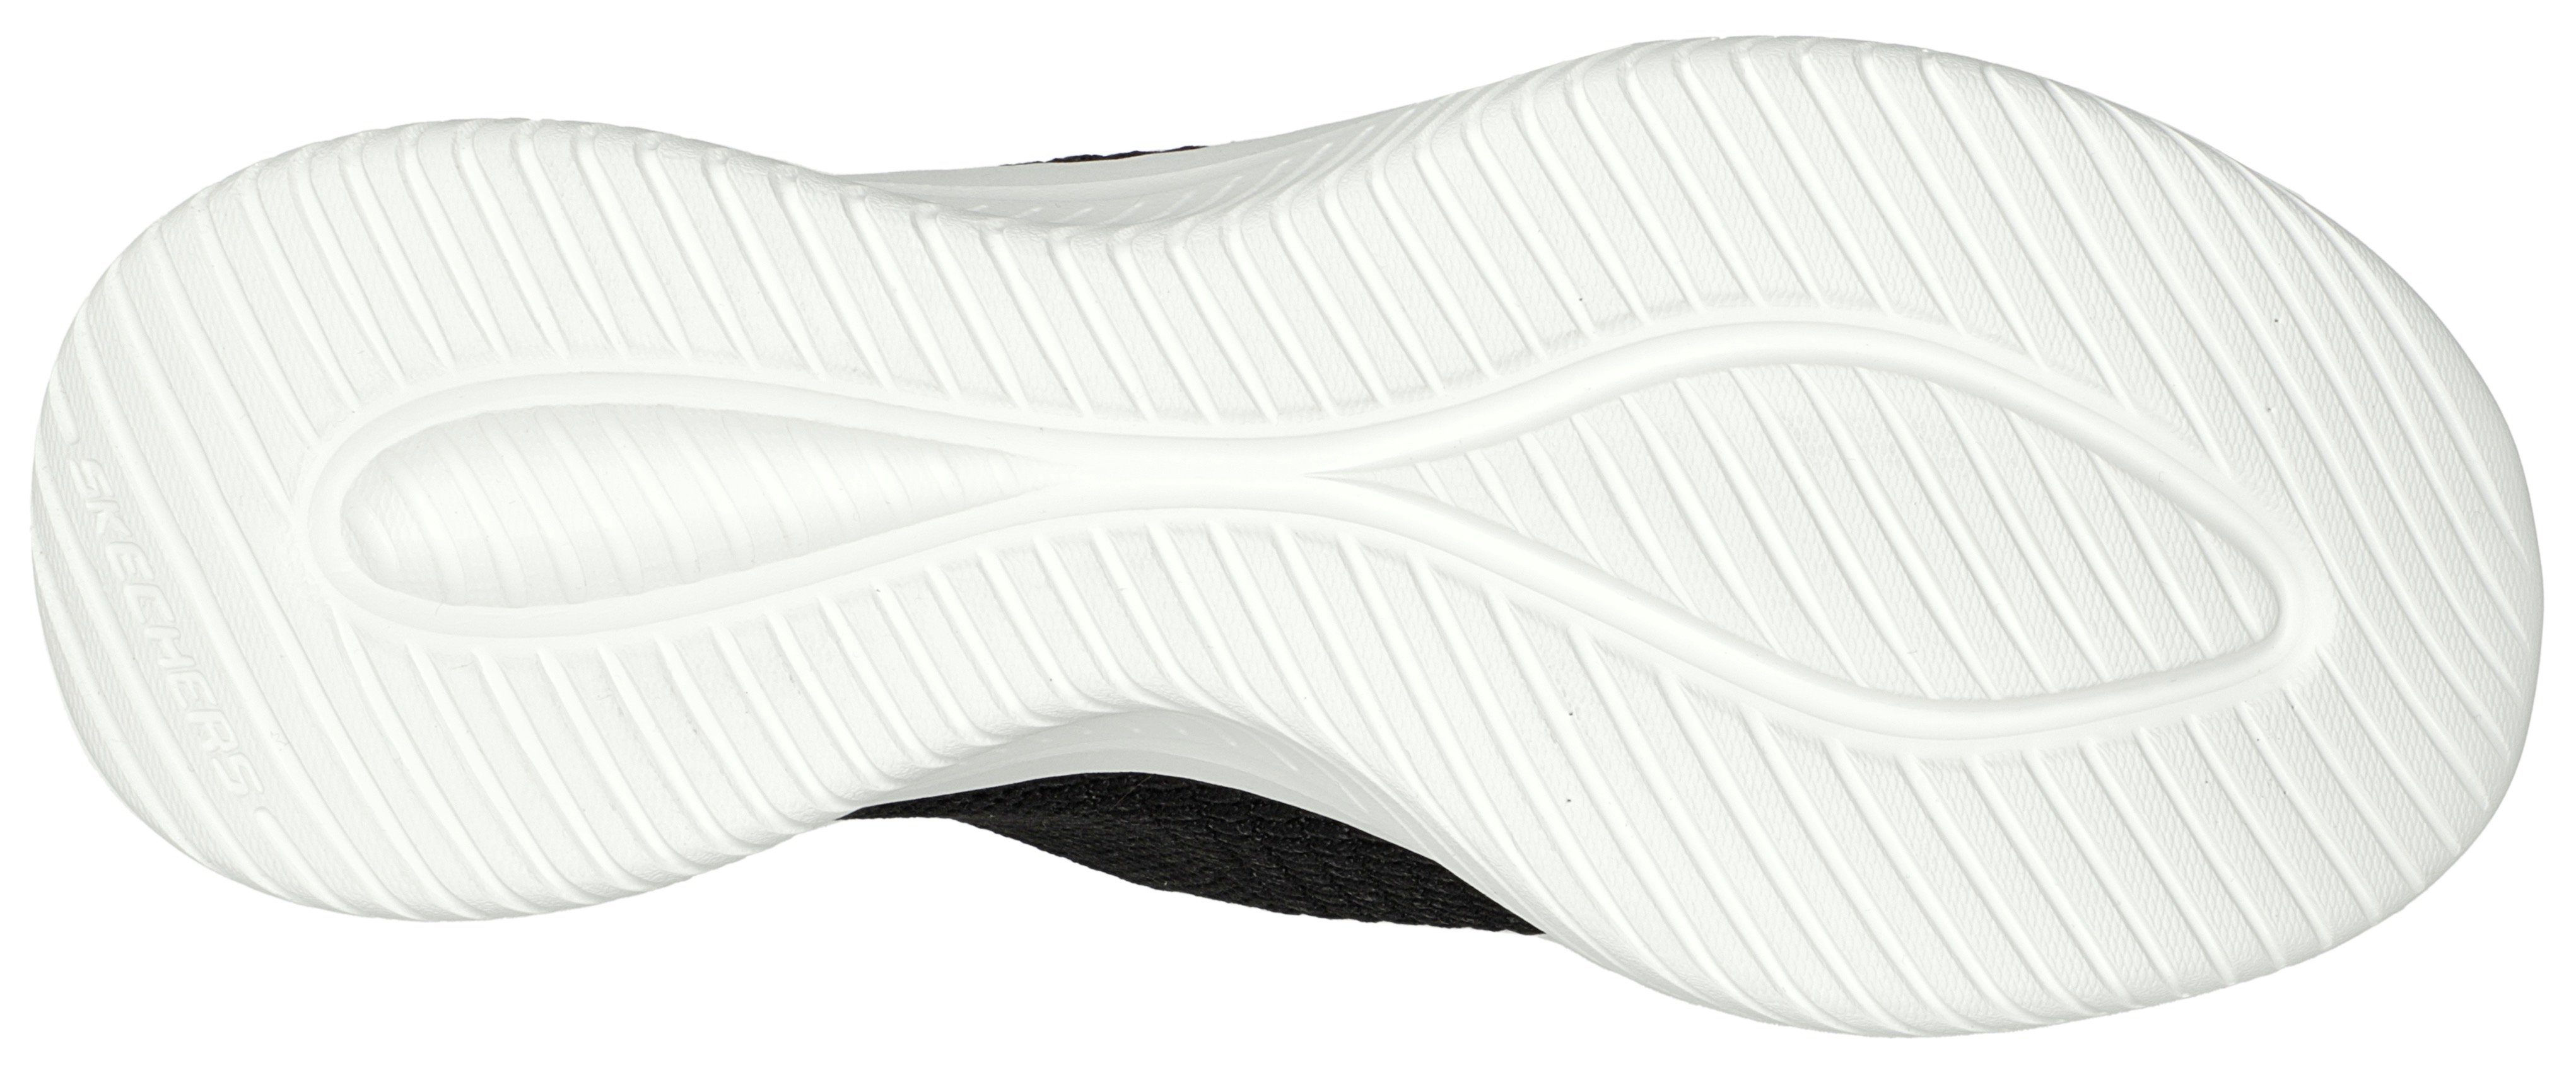 Sneaker (20203182) 3.0 Slip-On ULTRA Verarbeitung BLACK STEP in SMOOTH FLEX - veganer Skechers